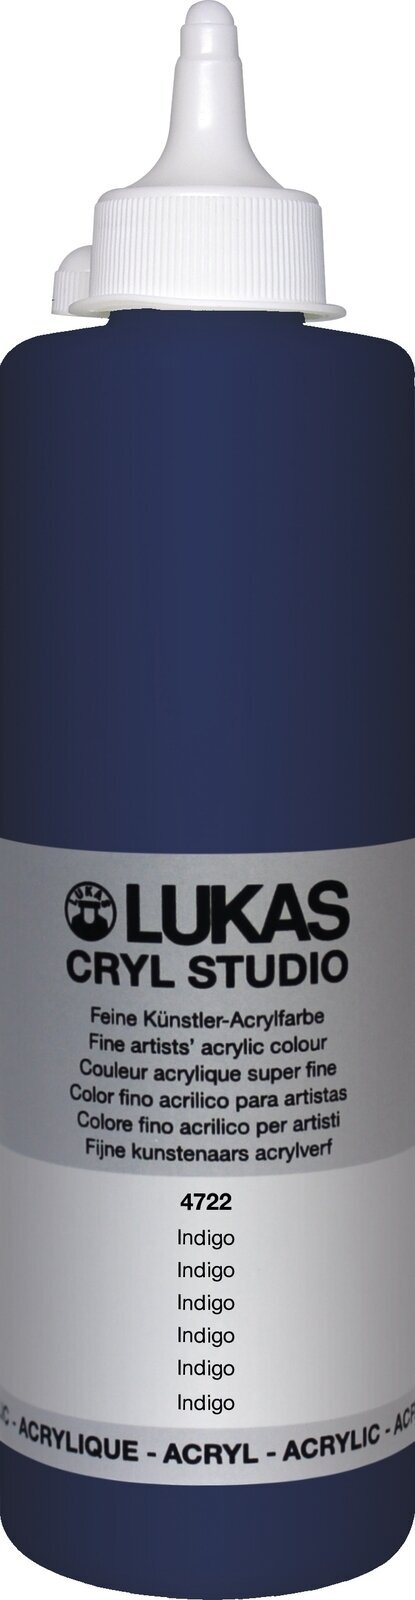 Akrylmaling Lukas Cryl Studio Akrylmaling 500 ml Indigo